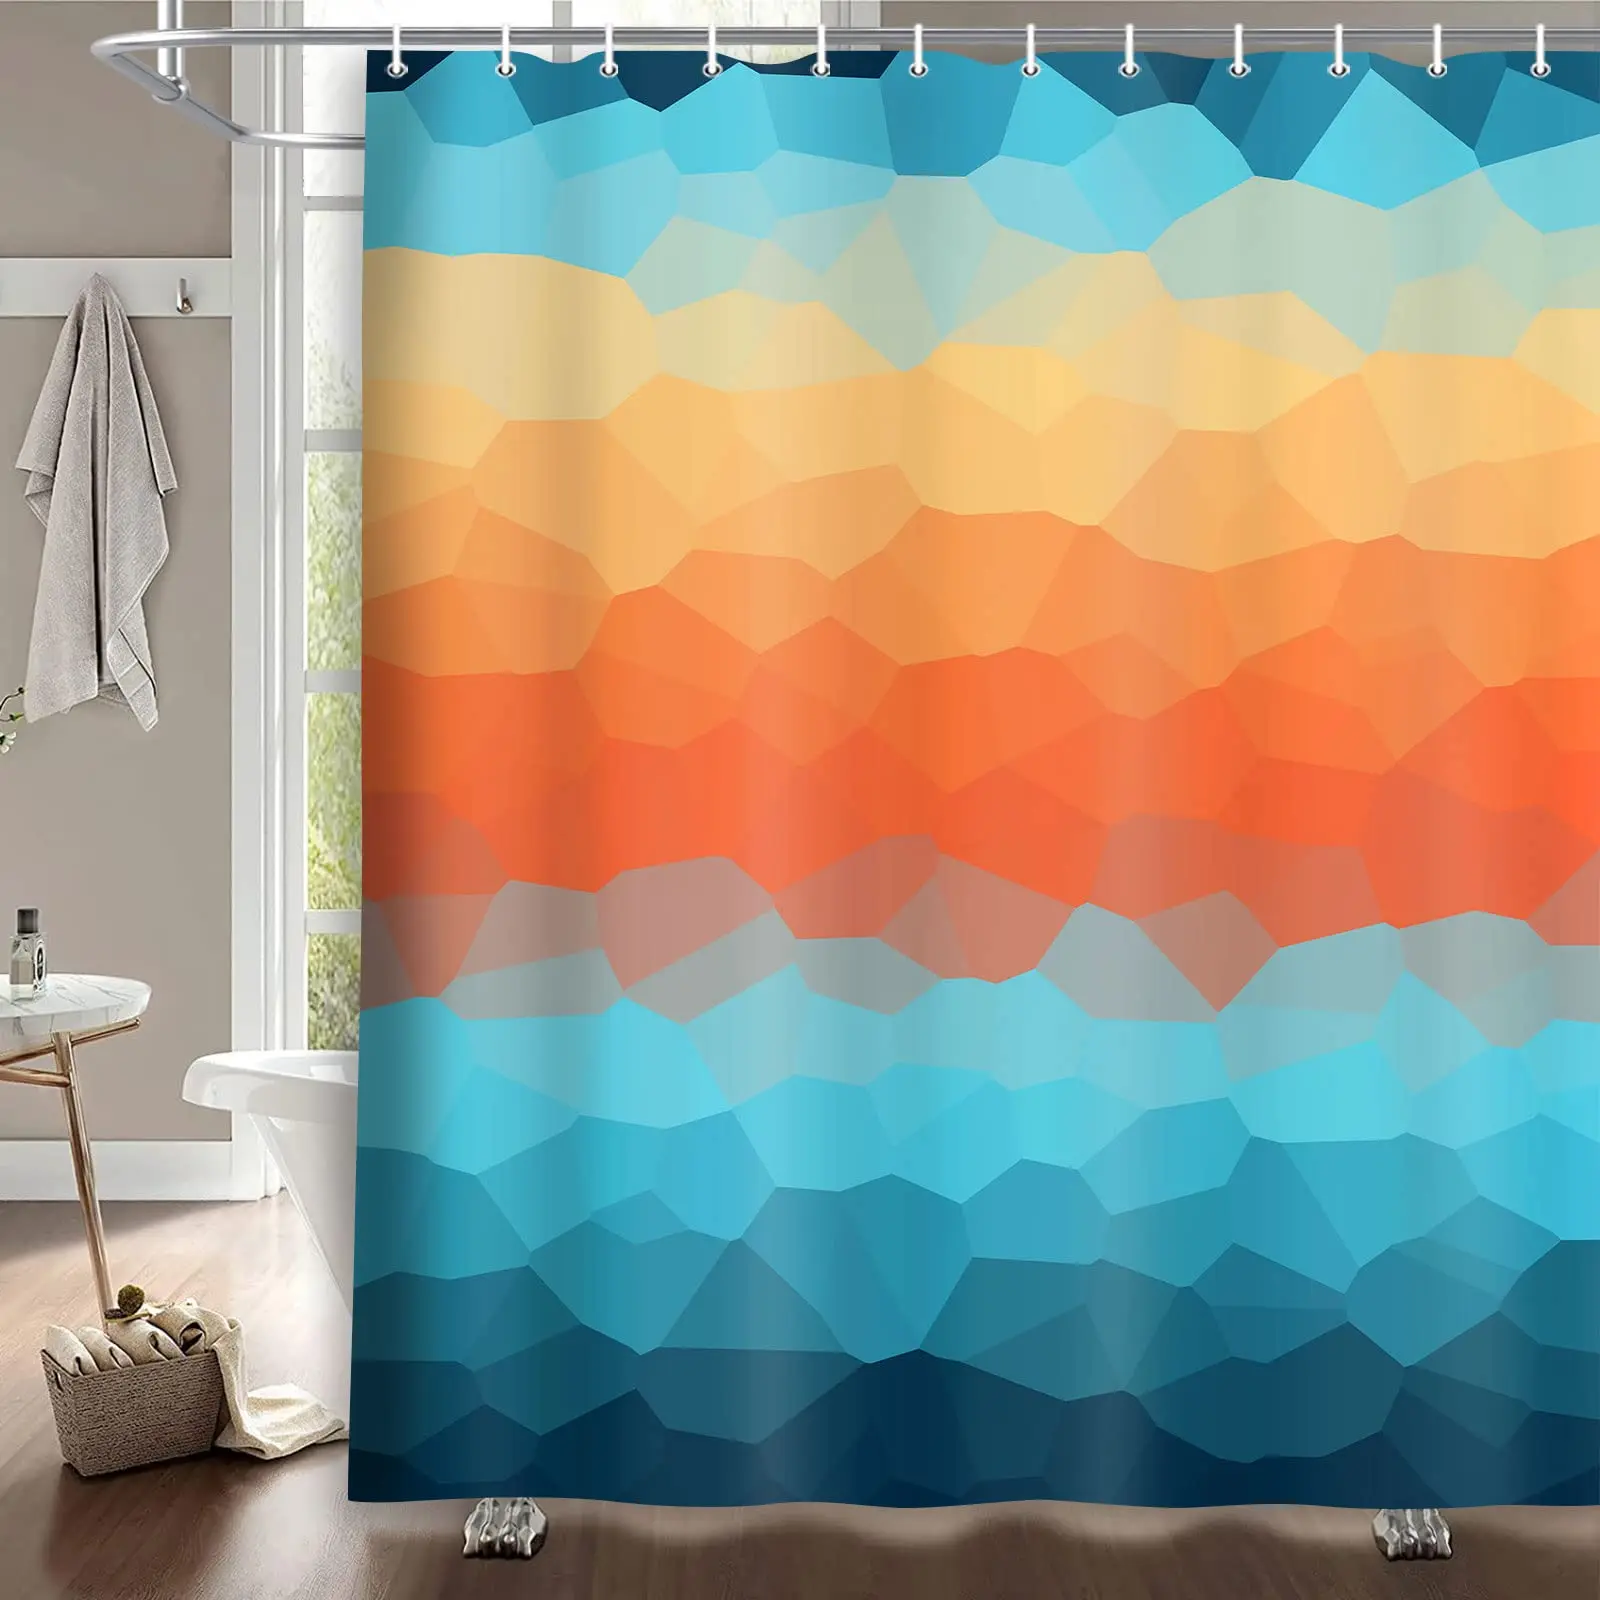 S For Bathroom, Gradient Color Design Art Waterproof Fabric Bath Curtains,teal/blue/orange